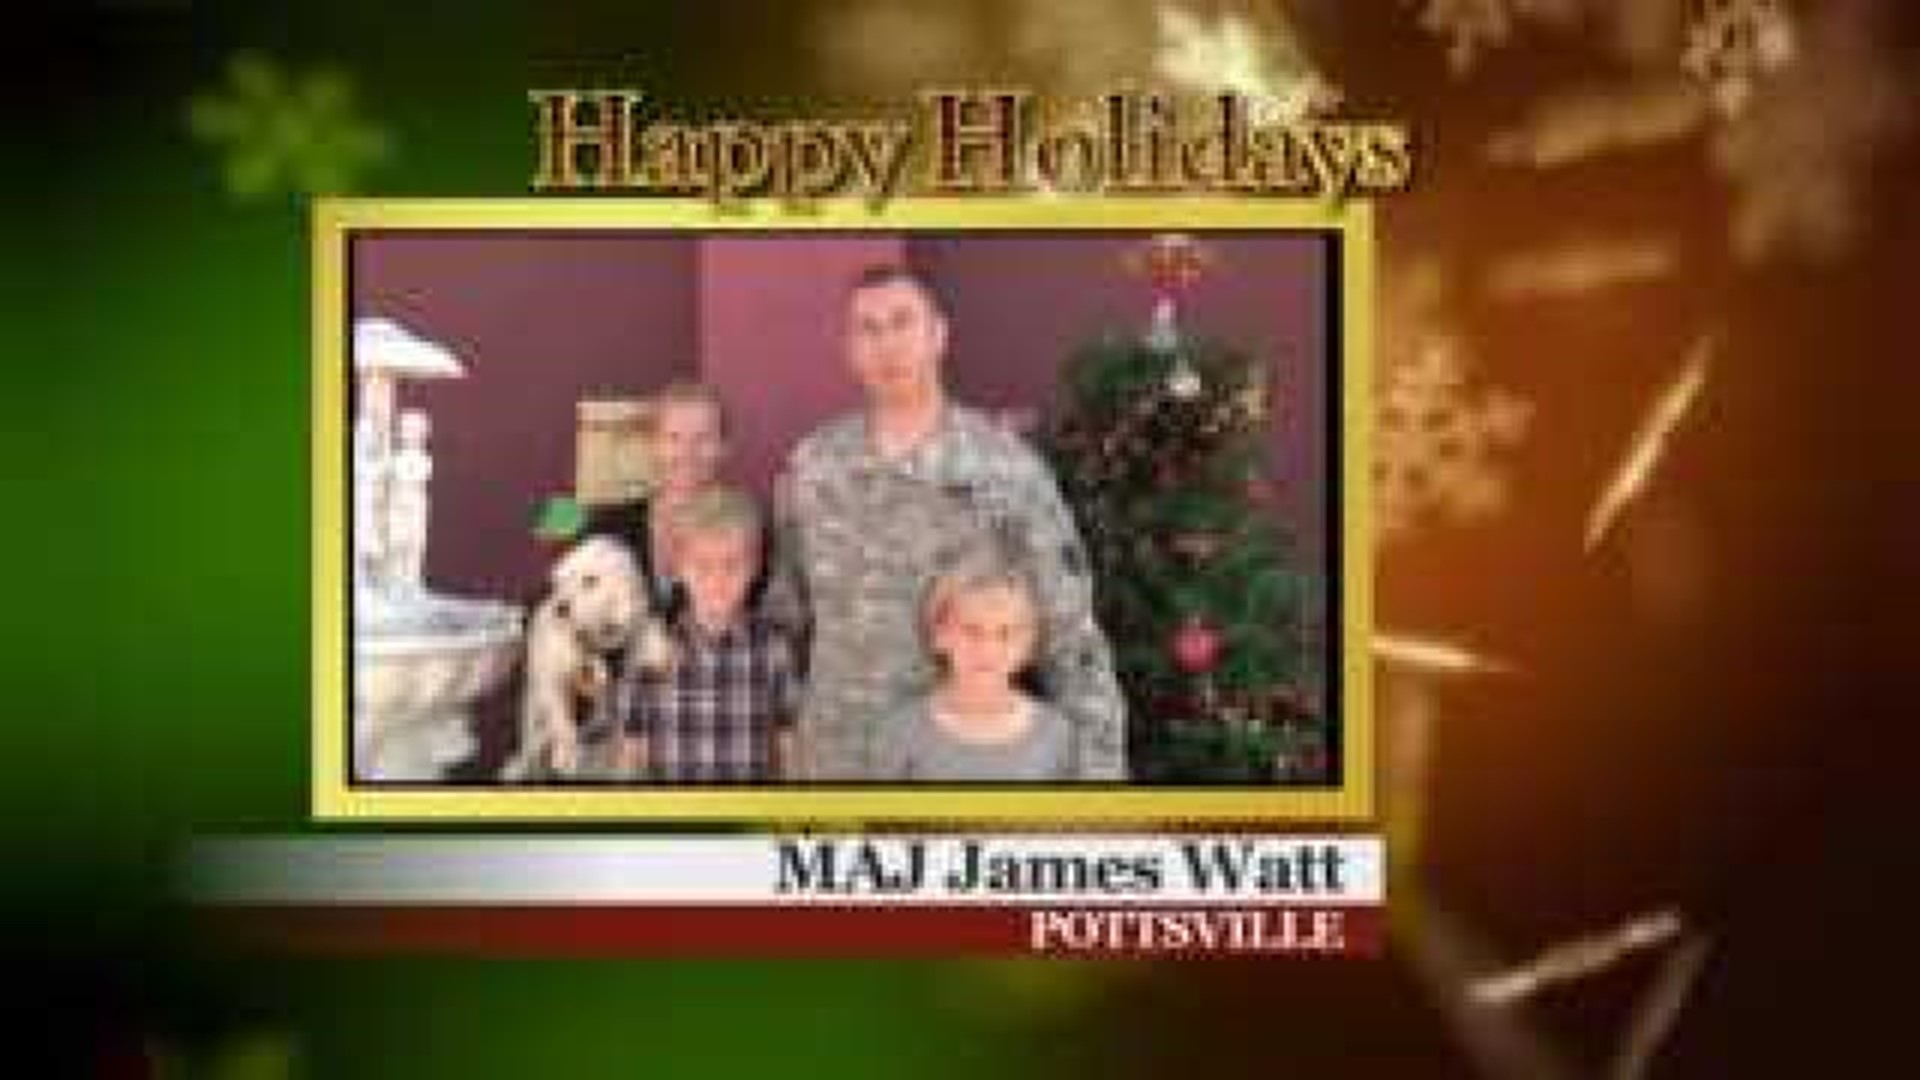 Military Greeting: MAJ James Watt